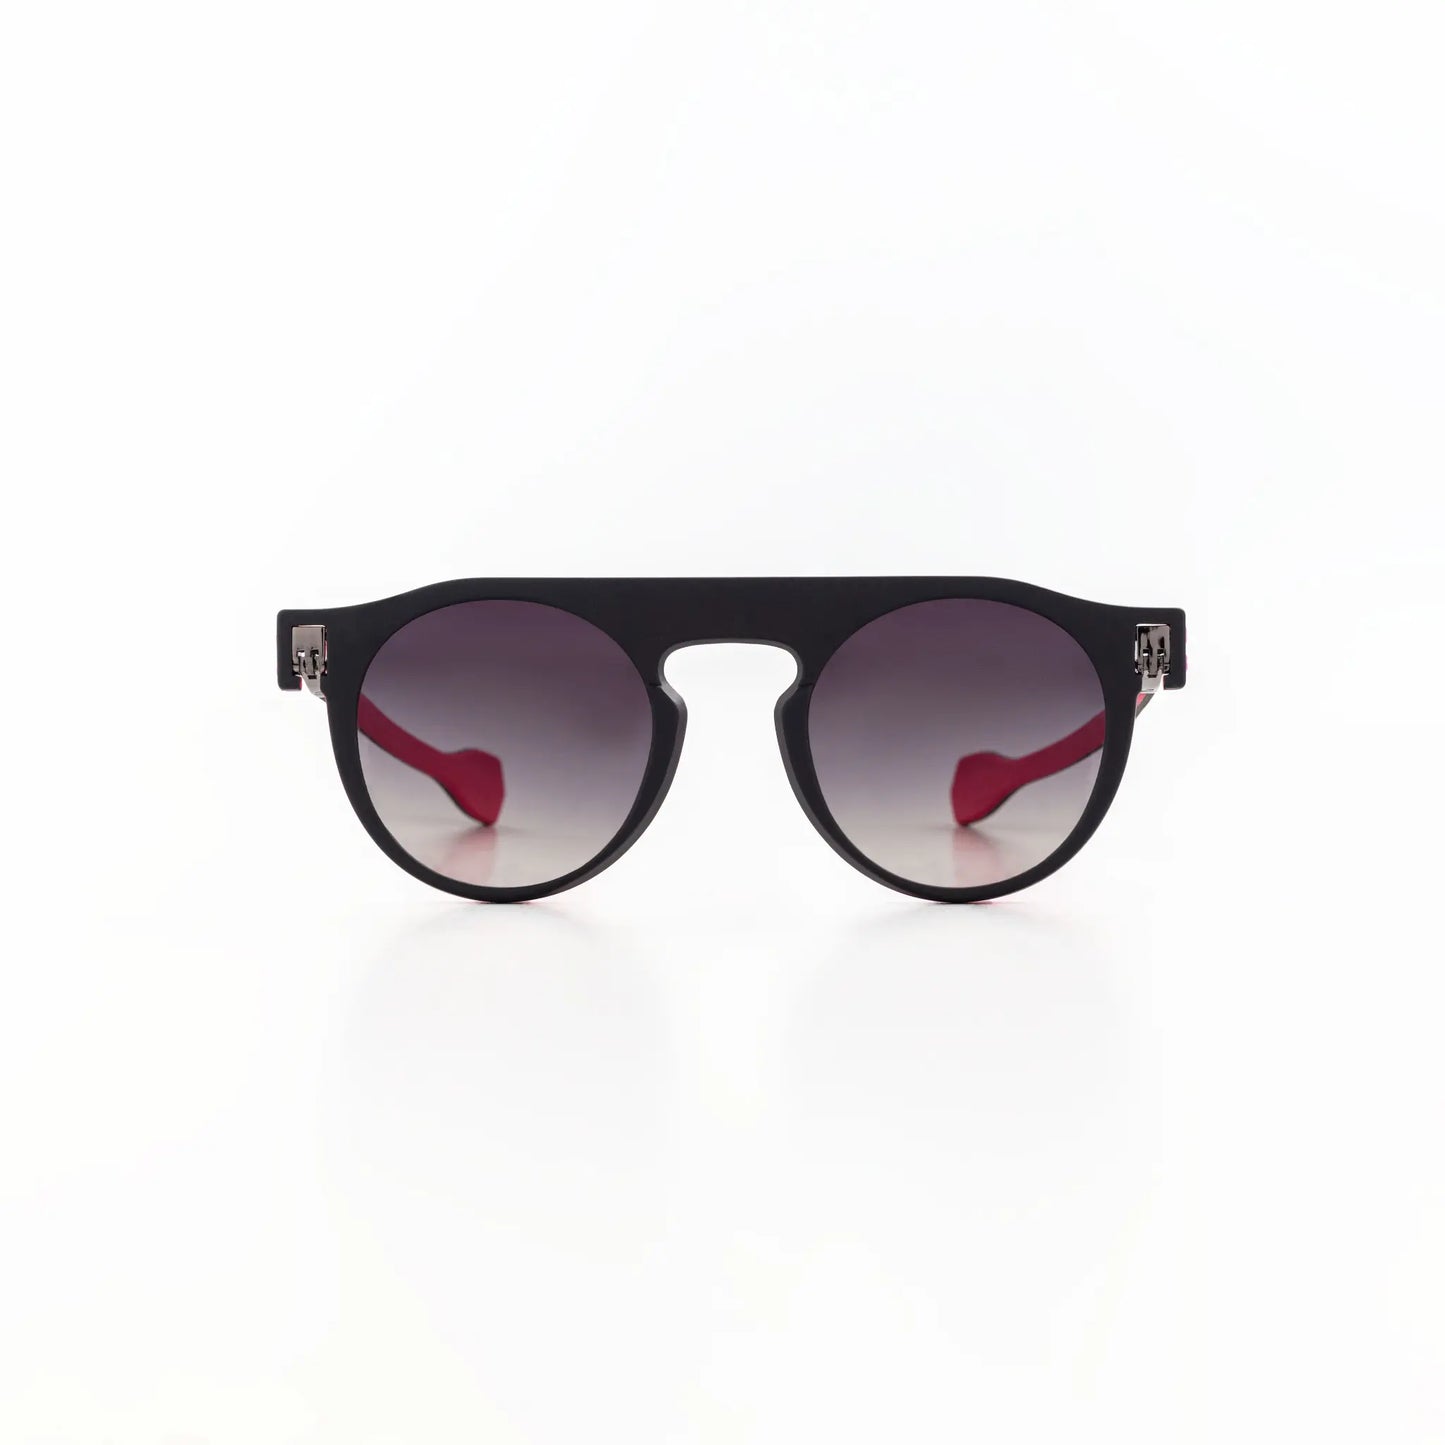 Reverso sunglasses black & pink reversible & ultra light front view 1